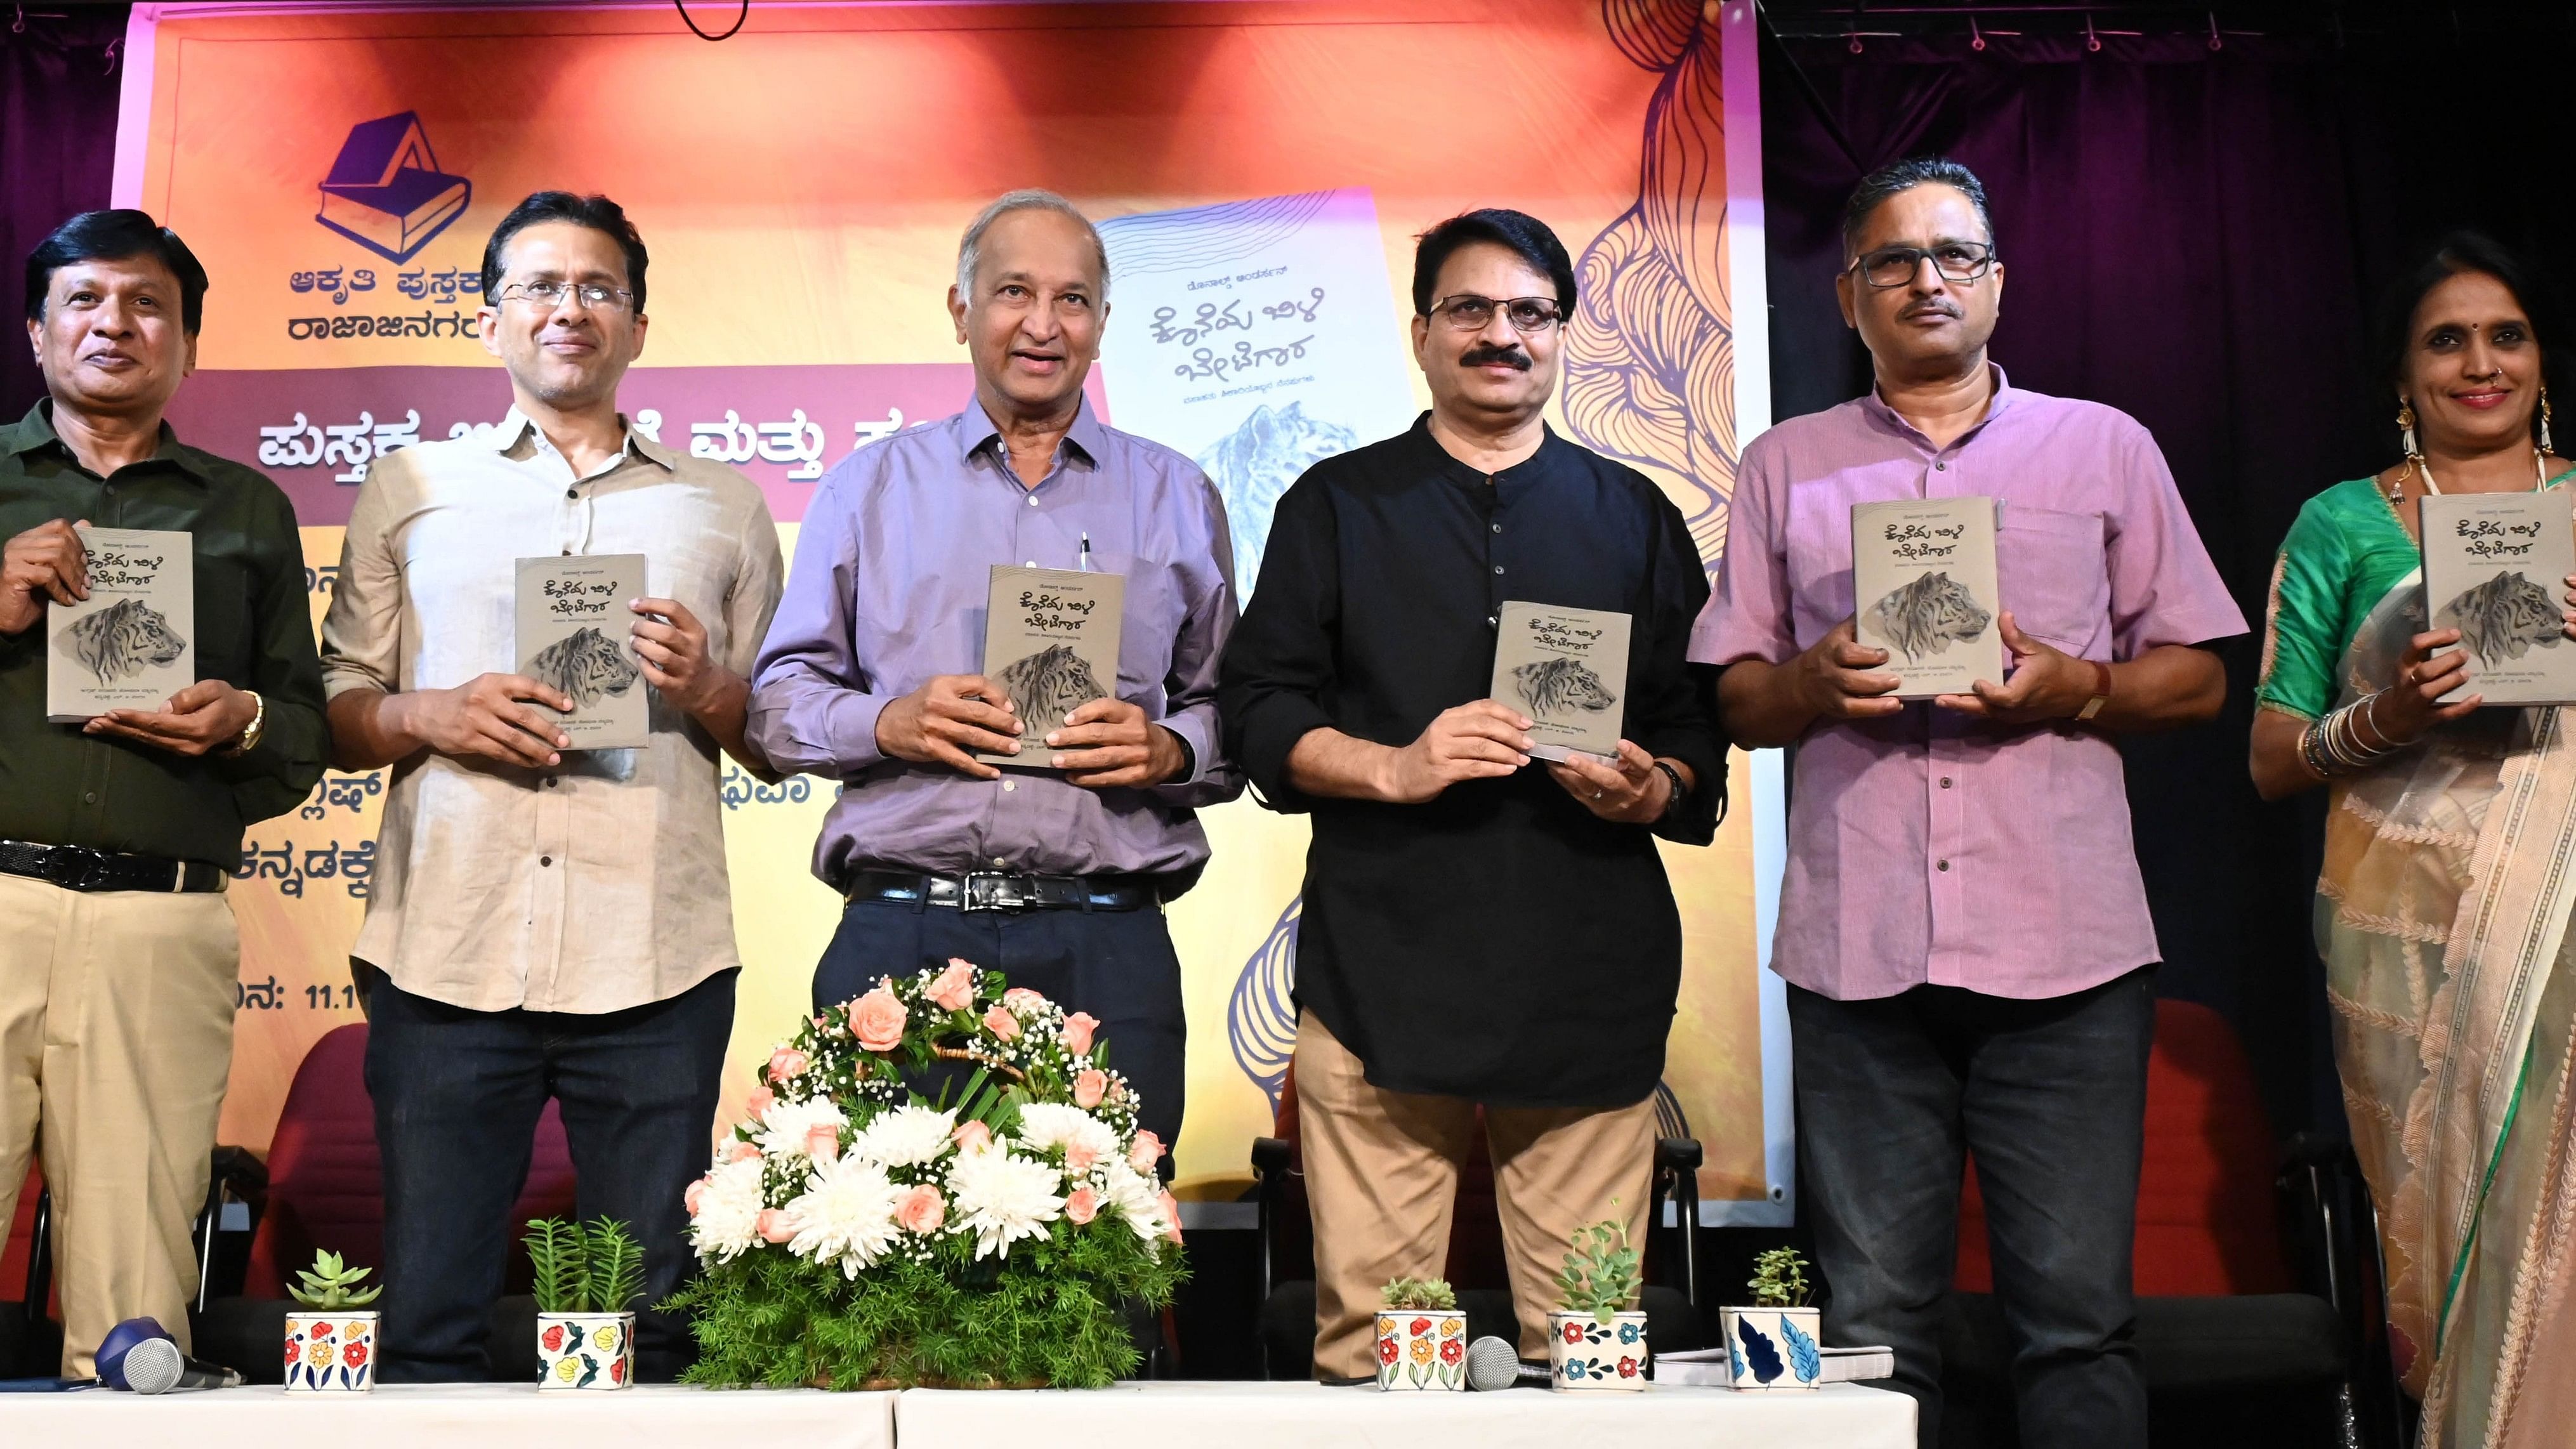 <div class="paragraphs"><p>Dr Ullas Karanth unveils the book ‘Koneya Bili Betegara’ at Bharatiya Vidya Bhavan in Bengaluru this Saturday.</p></div>